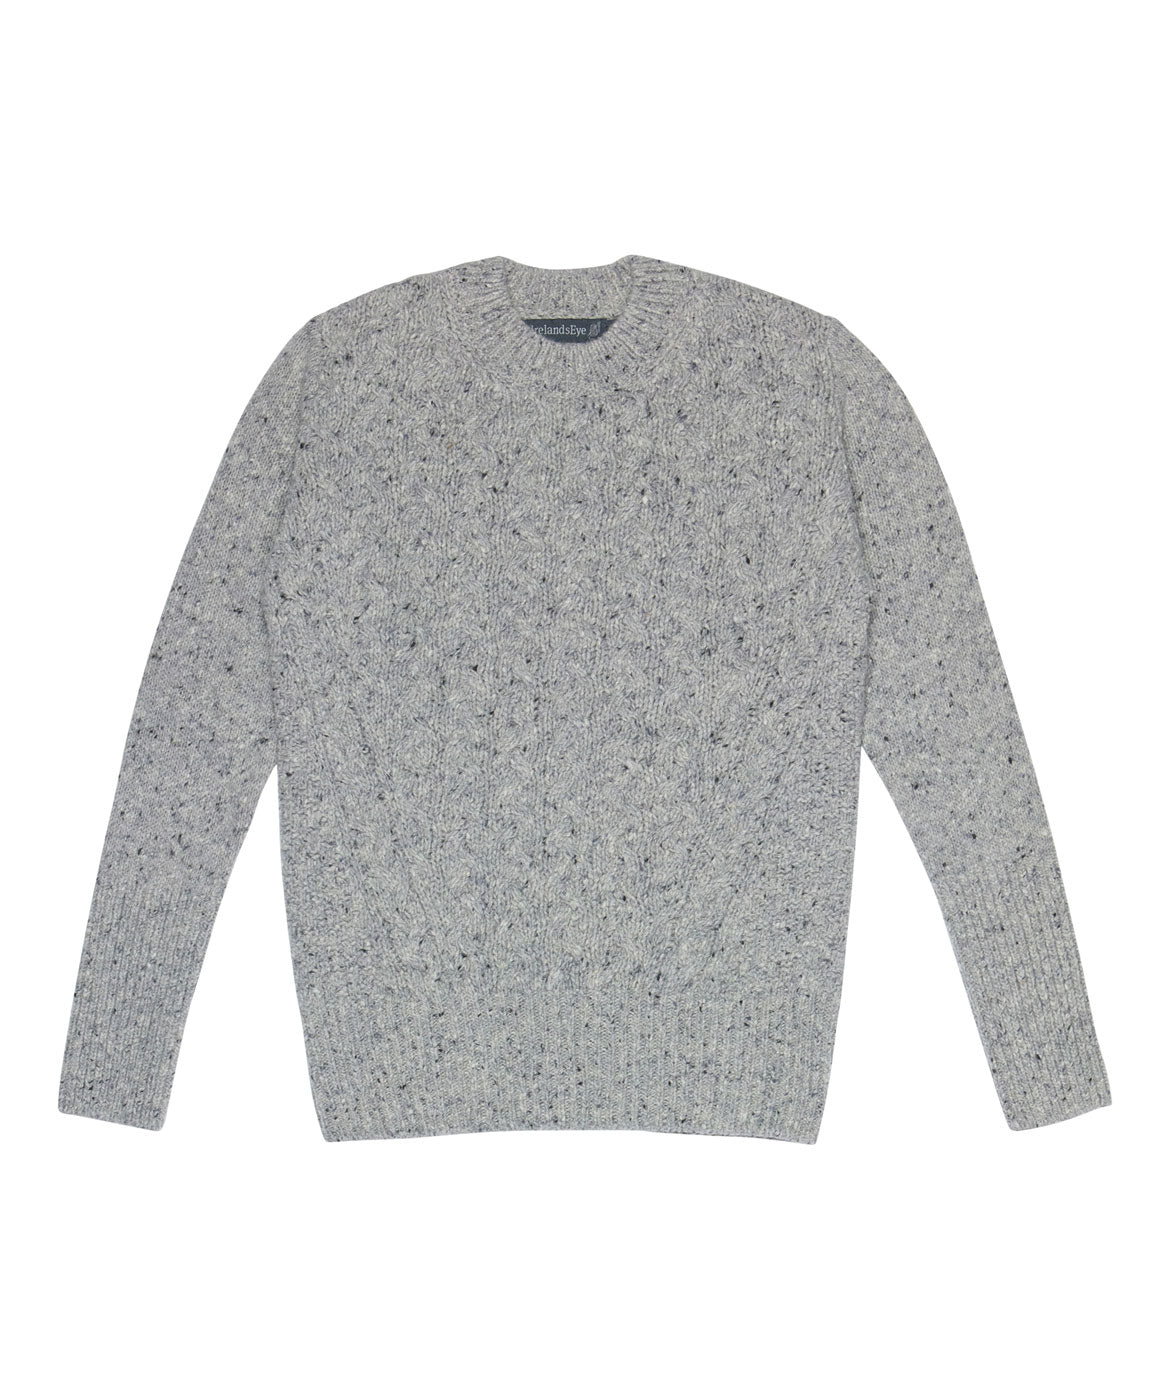 IrelandsEye Knitwear Kilcrea Cable Round Neck Sweater Light Grey